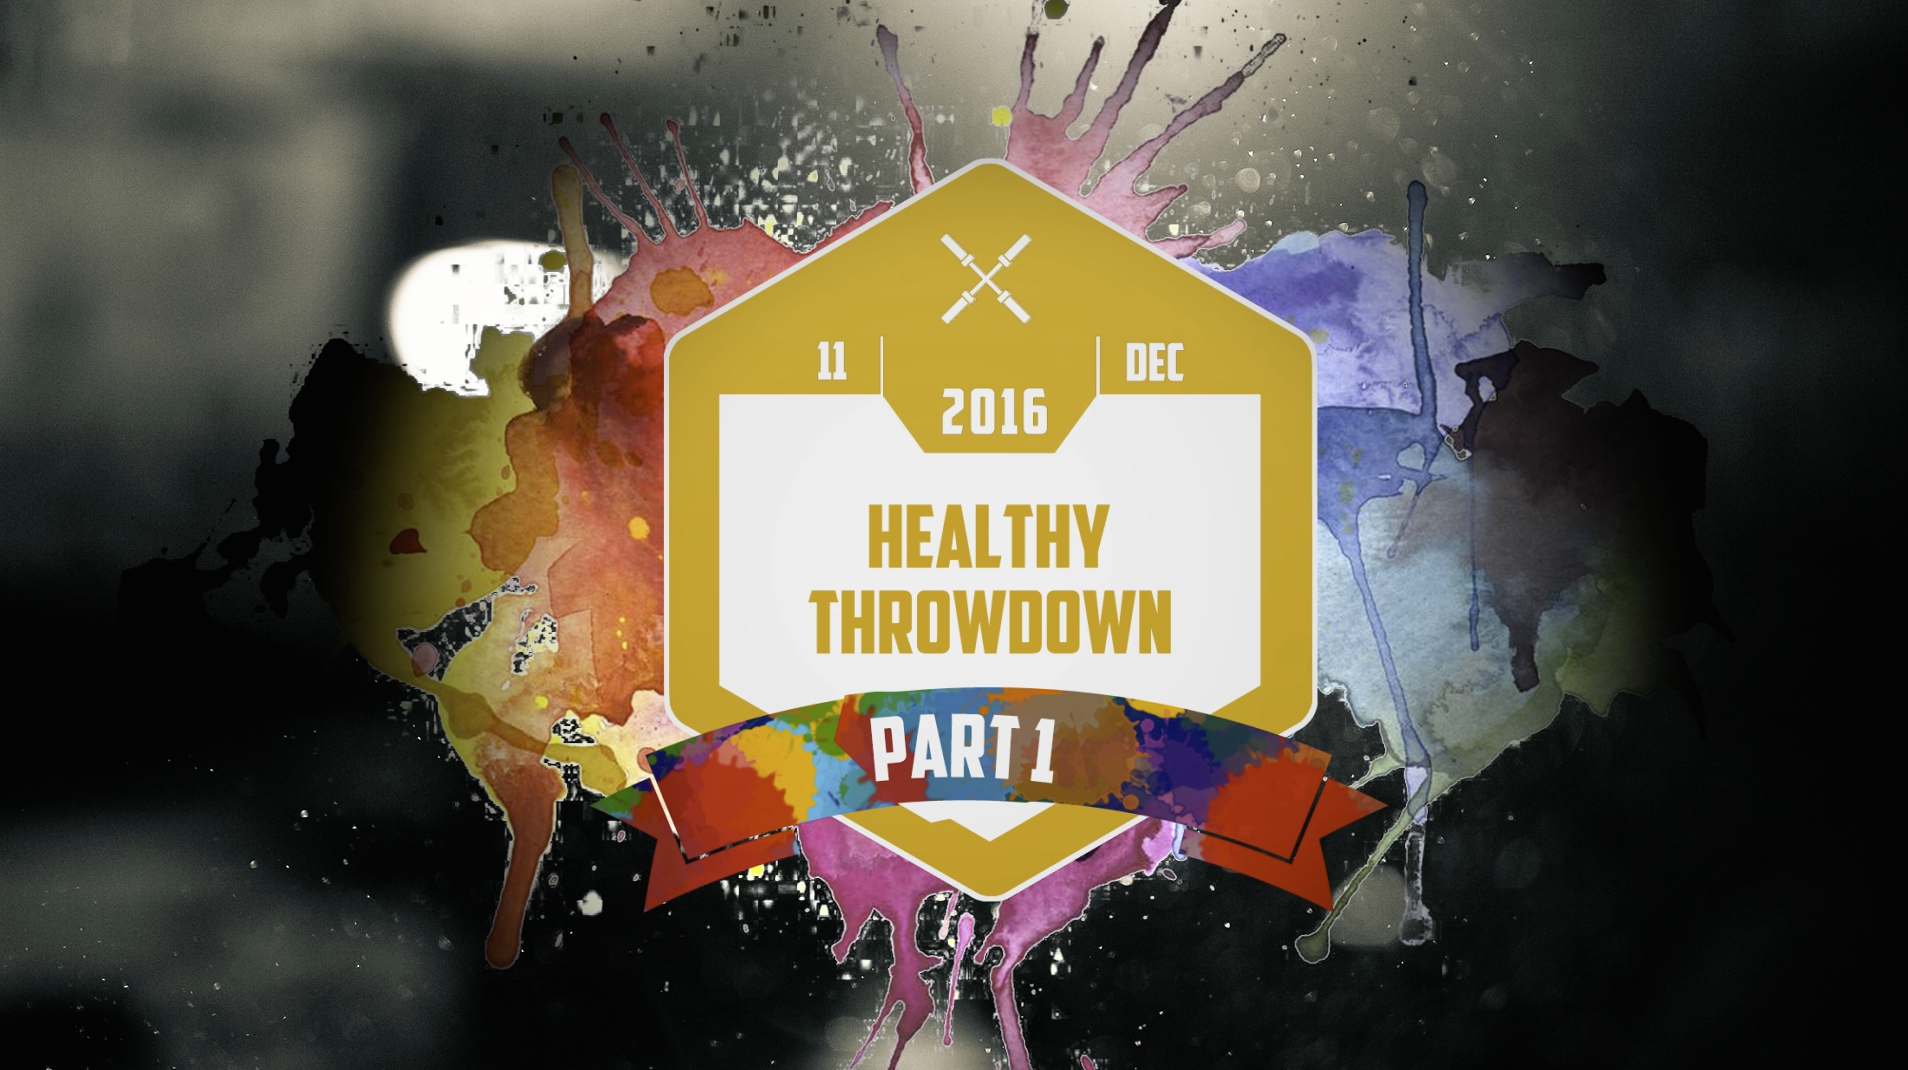 [Crossfit] Healthy Throwdown Part 1